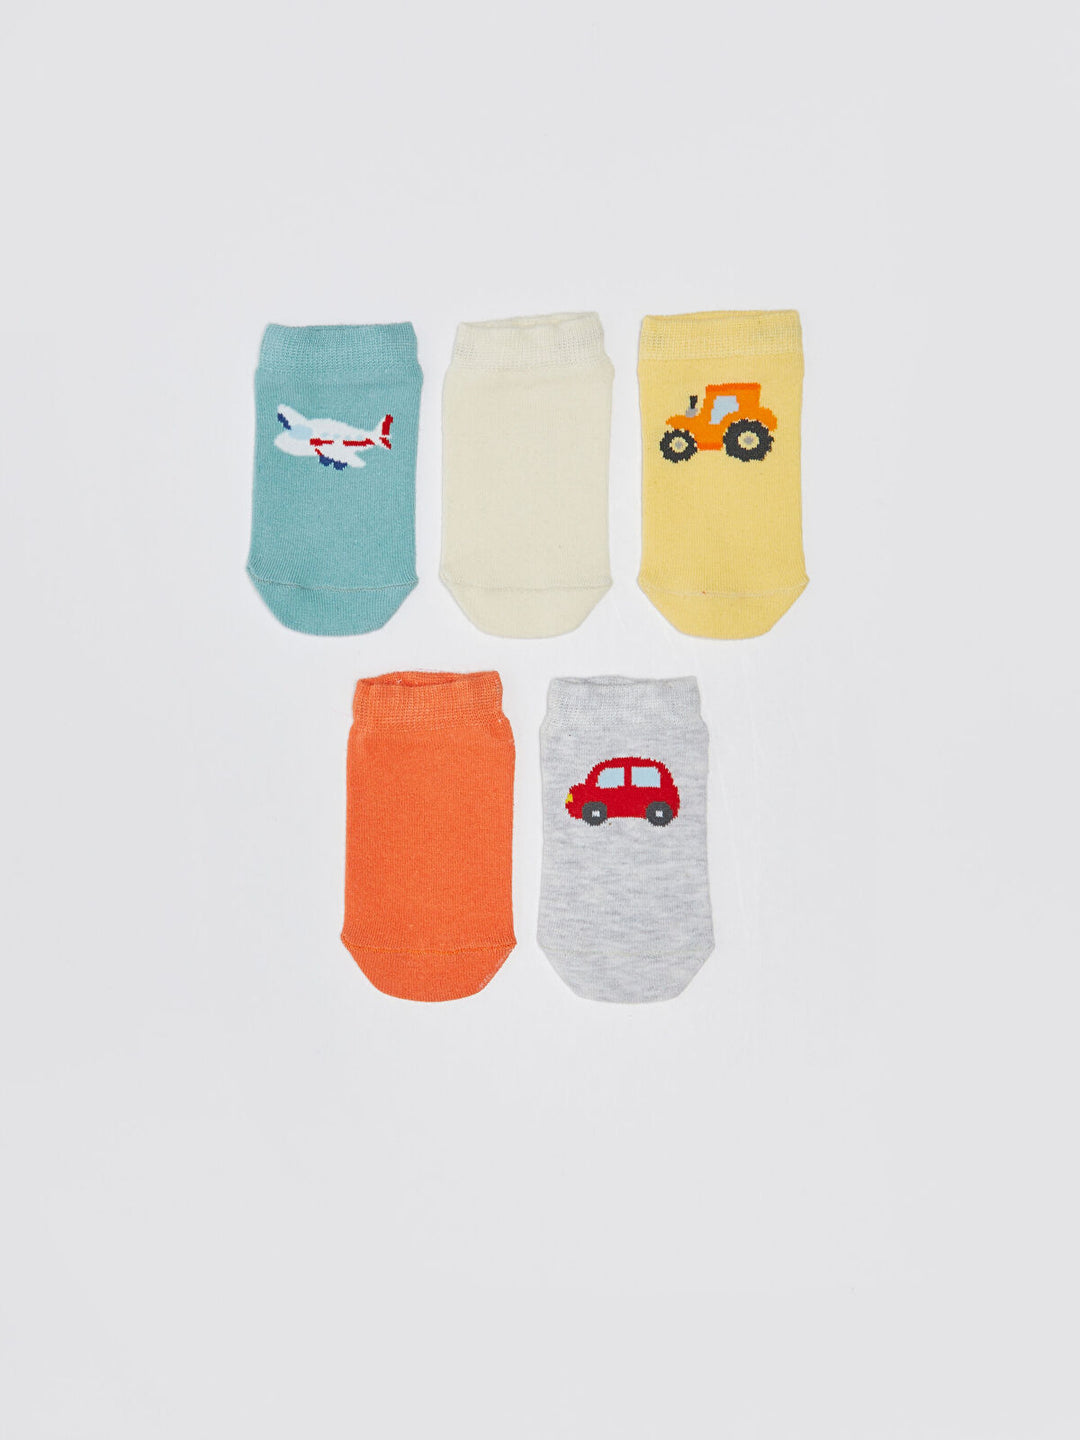 Printed Baby Boy Booties Socks 5 Pieces